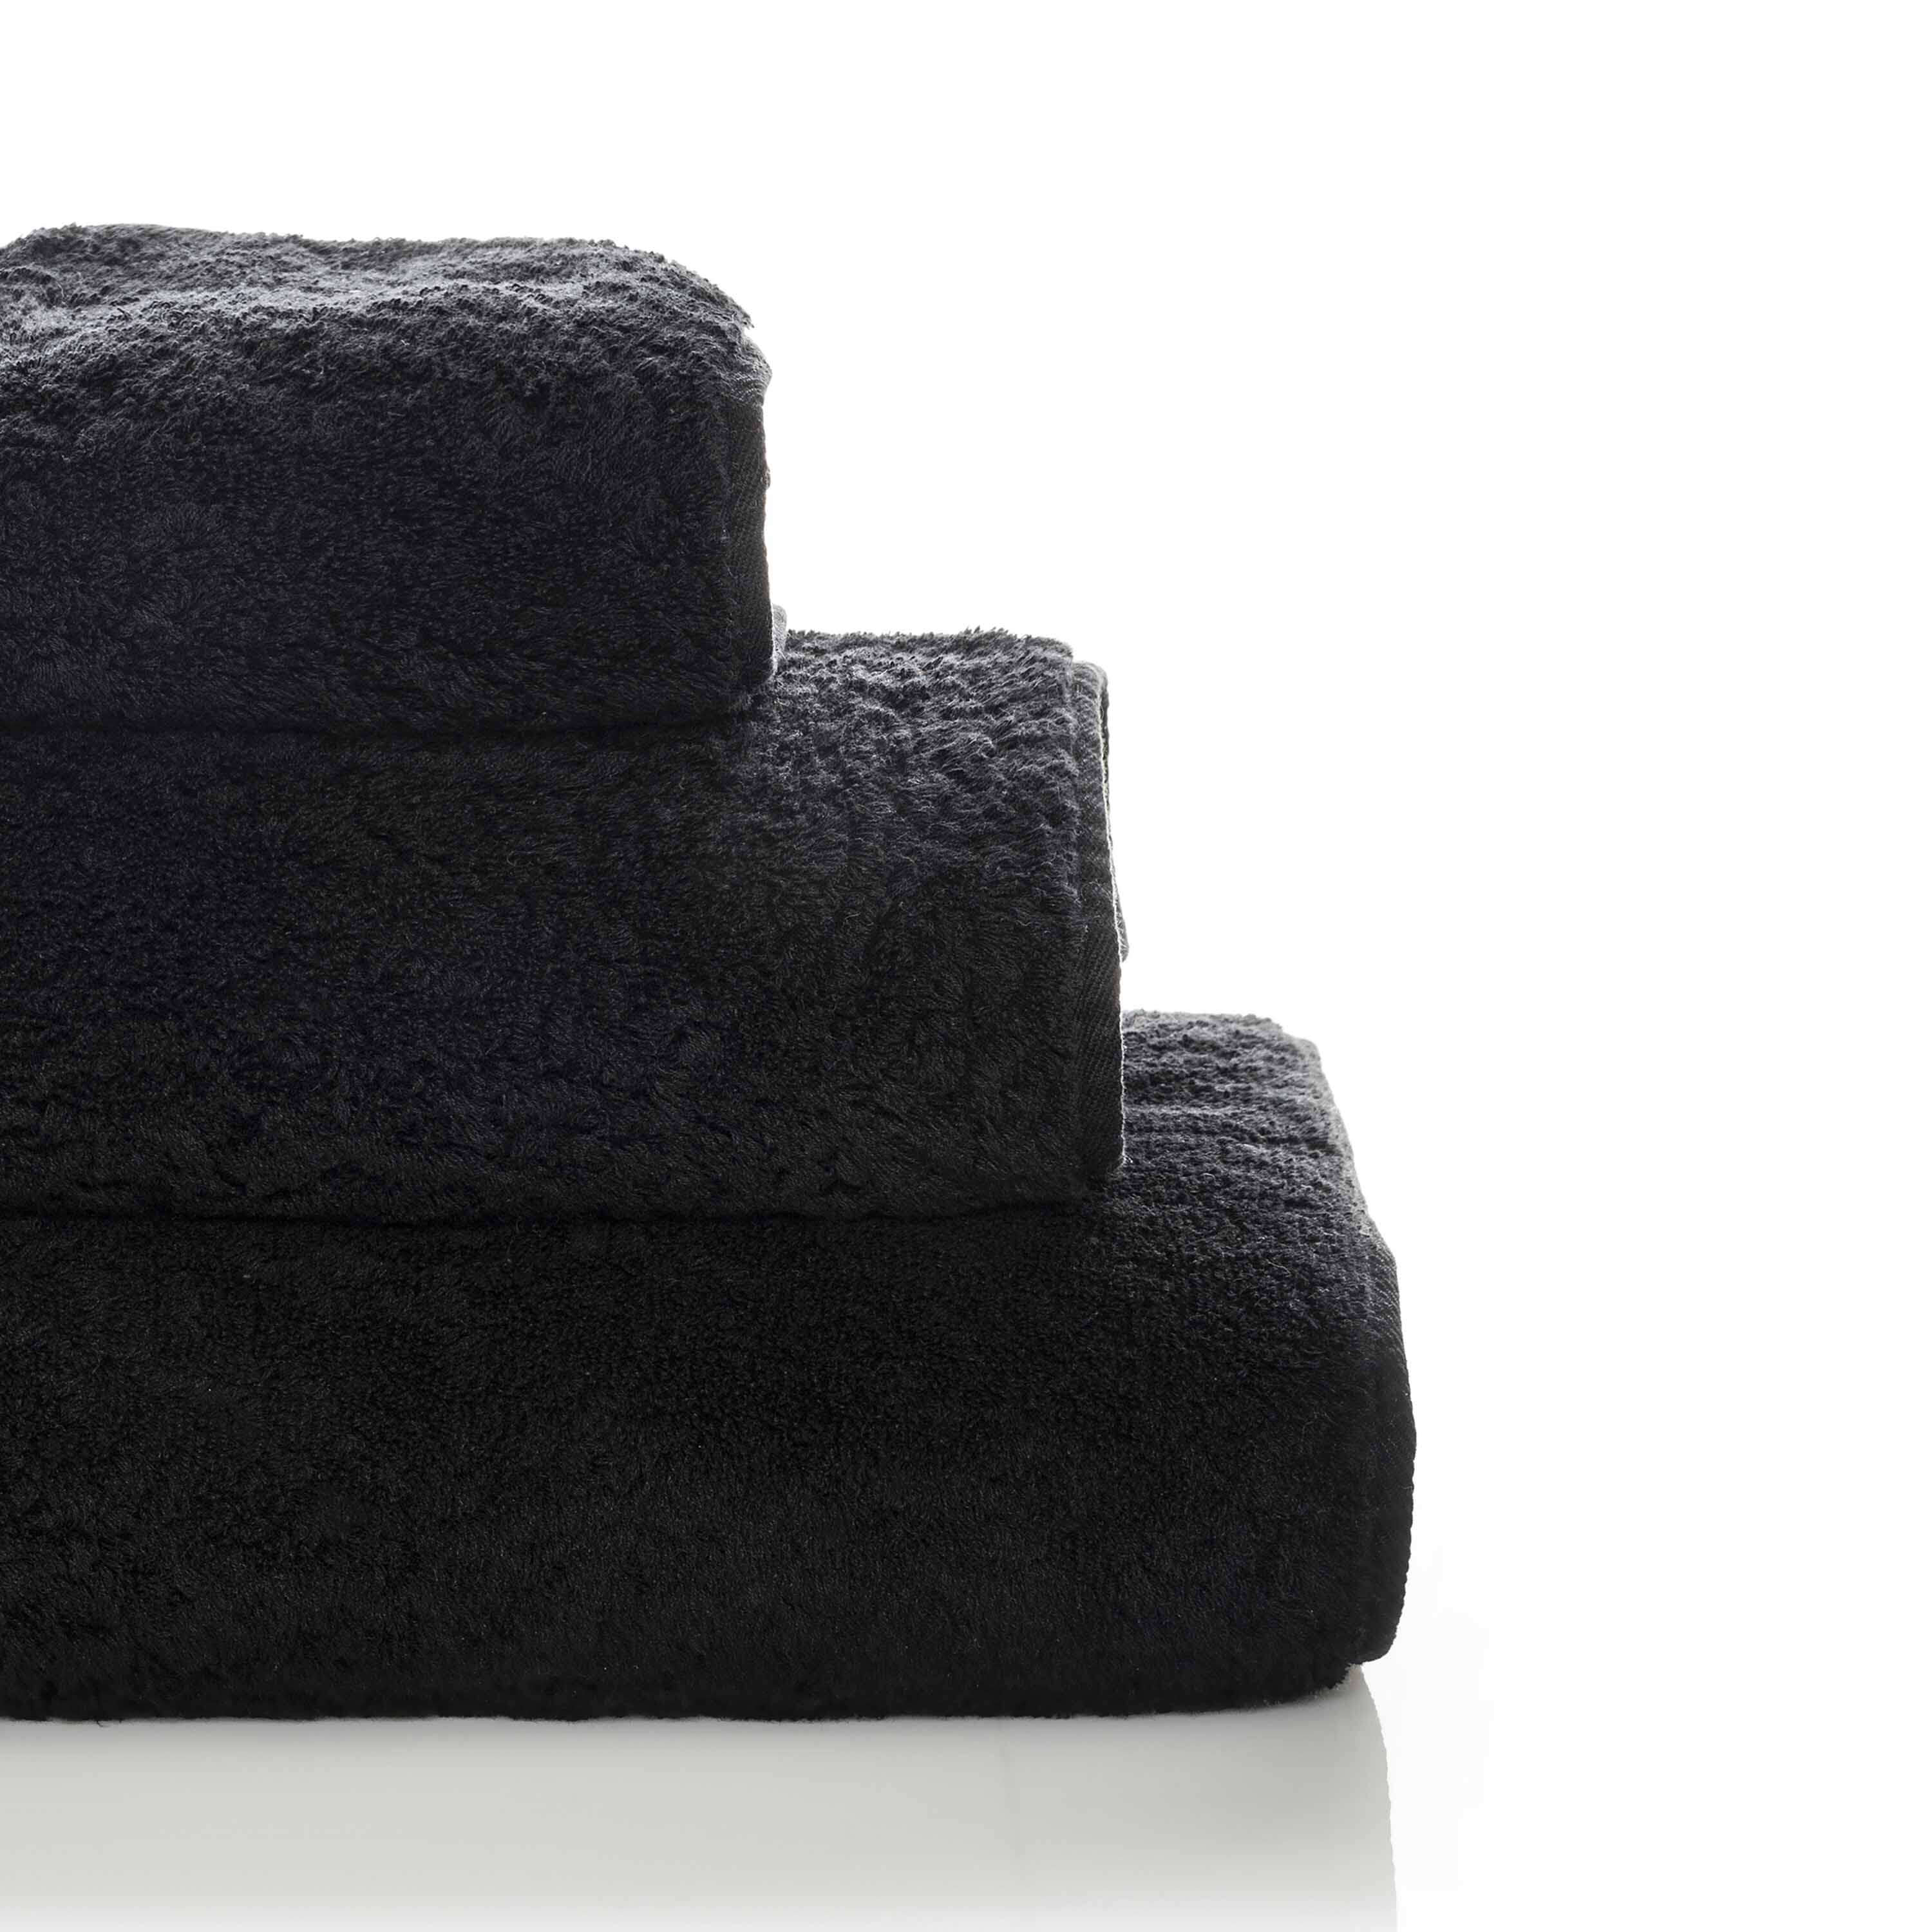 Элитное полотенце Egoist Range Black ☞ Размер: 30 x 30 см